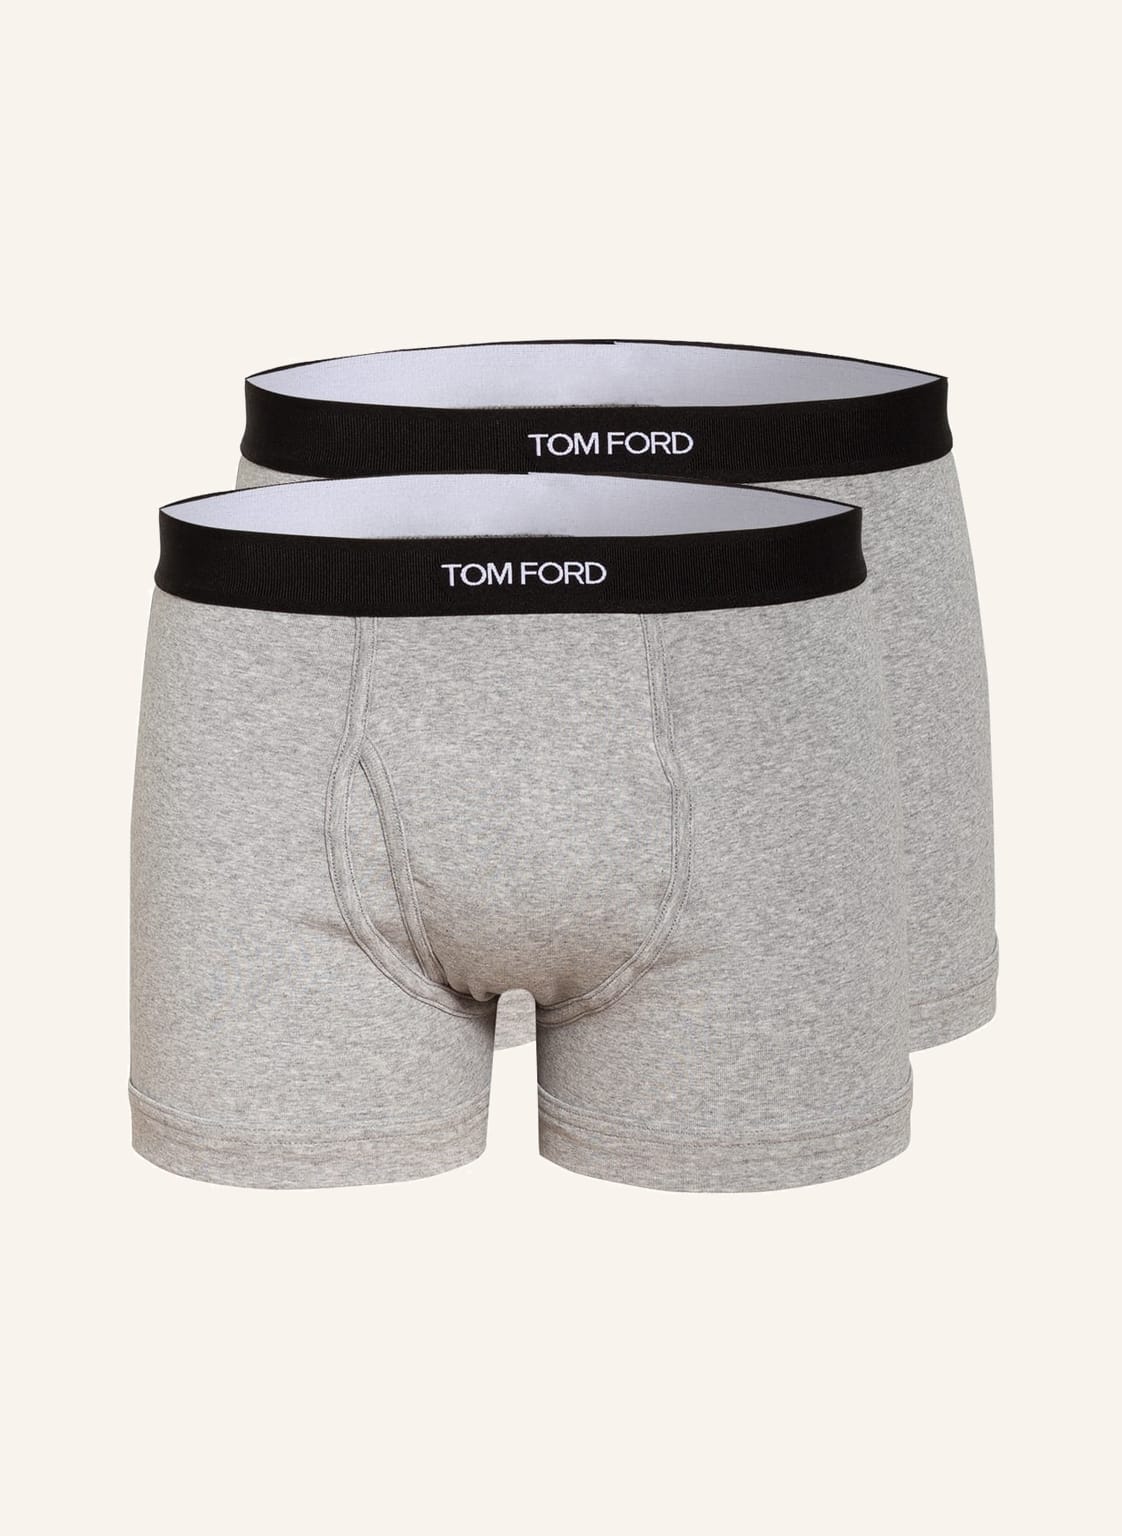 Image of Tom Ford 2er-Pack Boxershorts grau